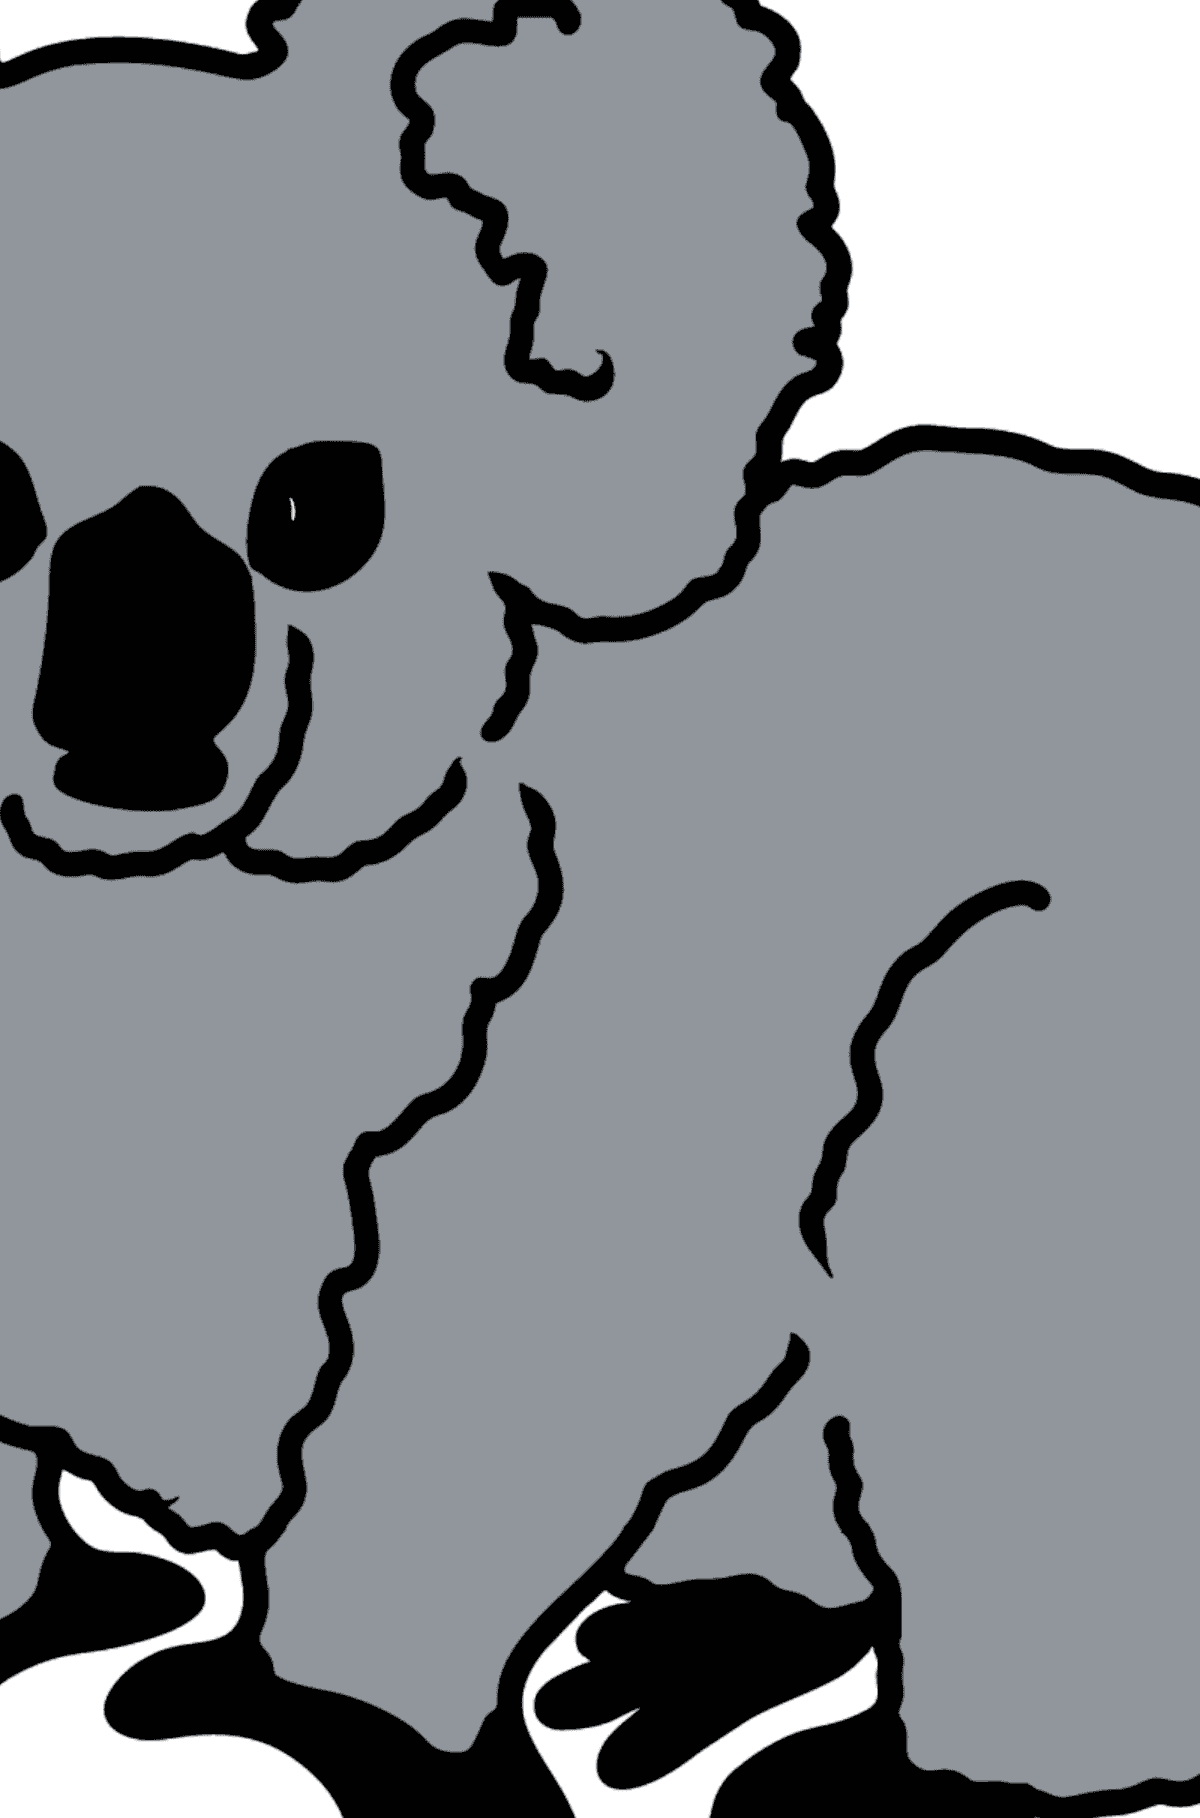 Koala Ausmalbild - Mathe Ausmalbilder - Subtraktion für Kinder